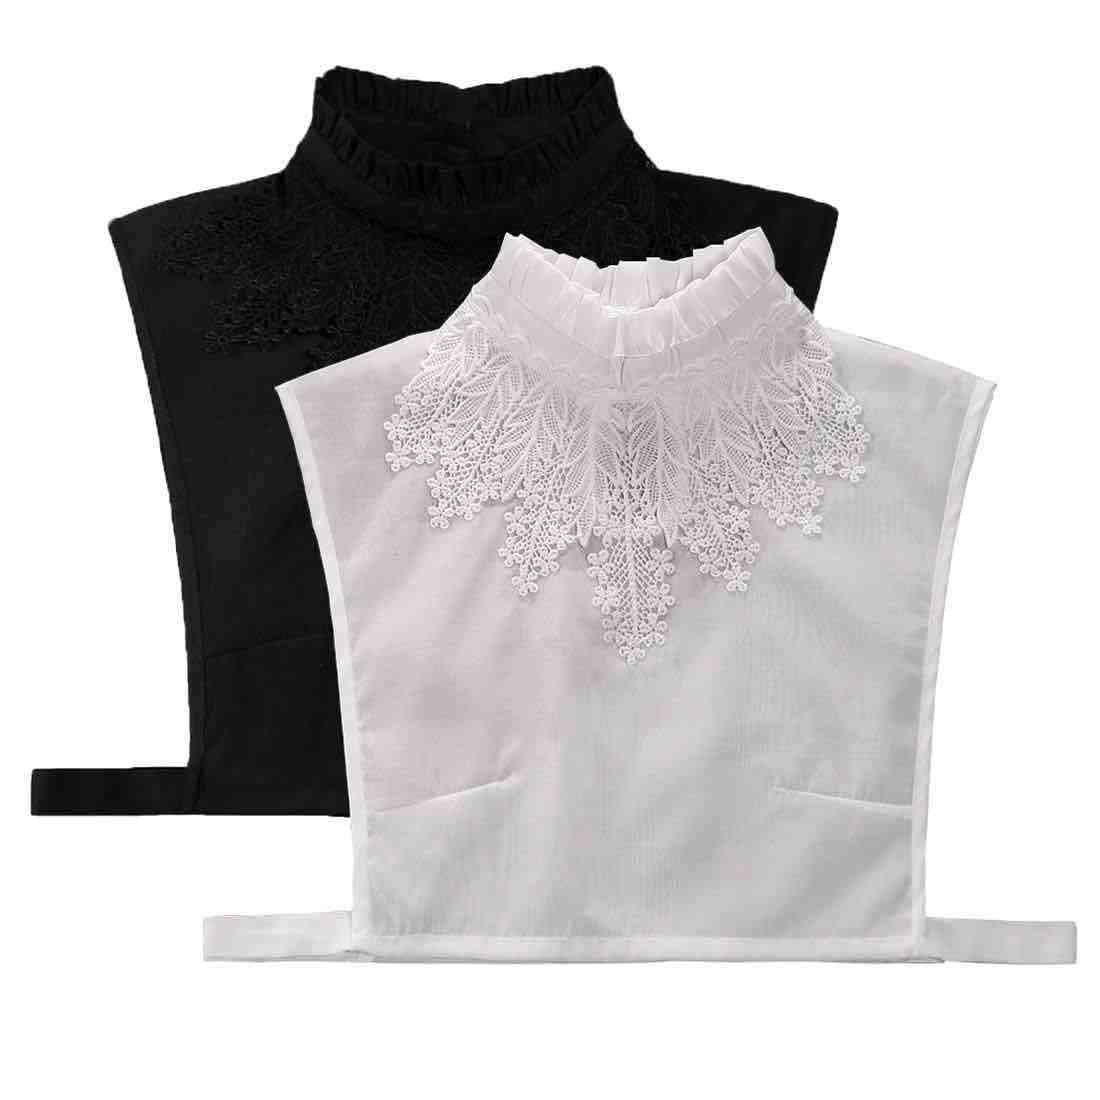 Adjustable Detachable Shirt / Tops For Adults - Women